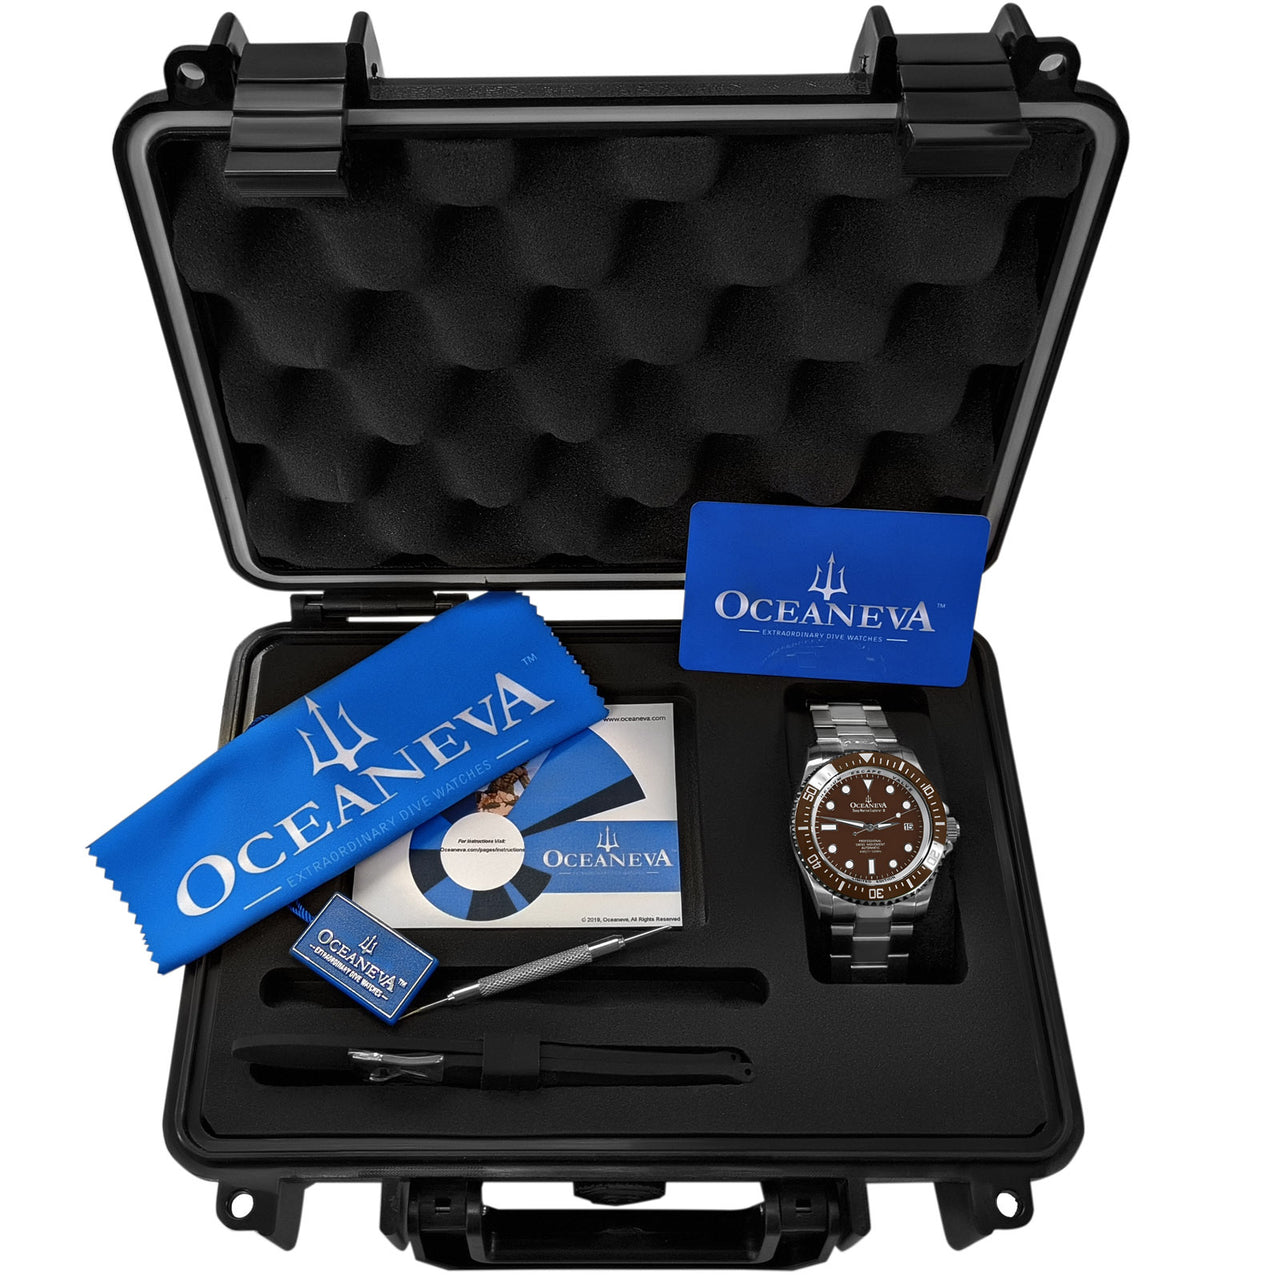 Oceaneva 1250M Dive Watch Brown With Packaging 